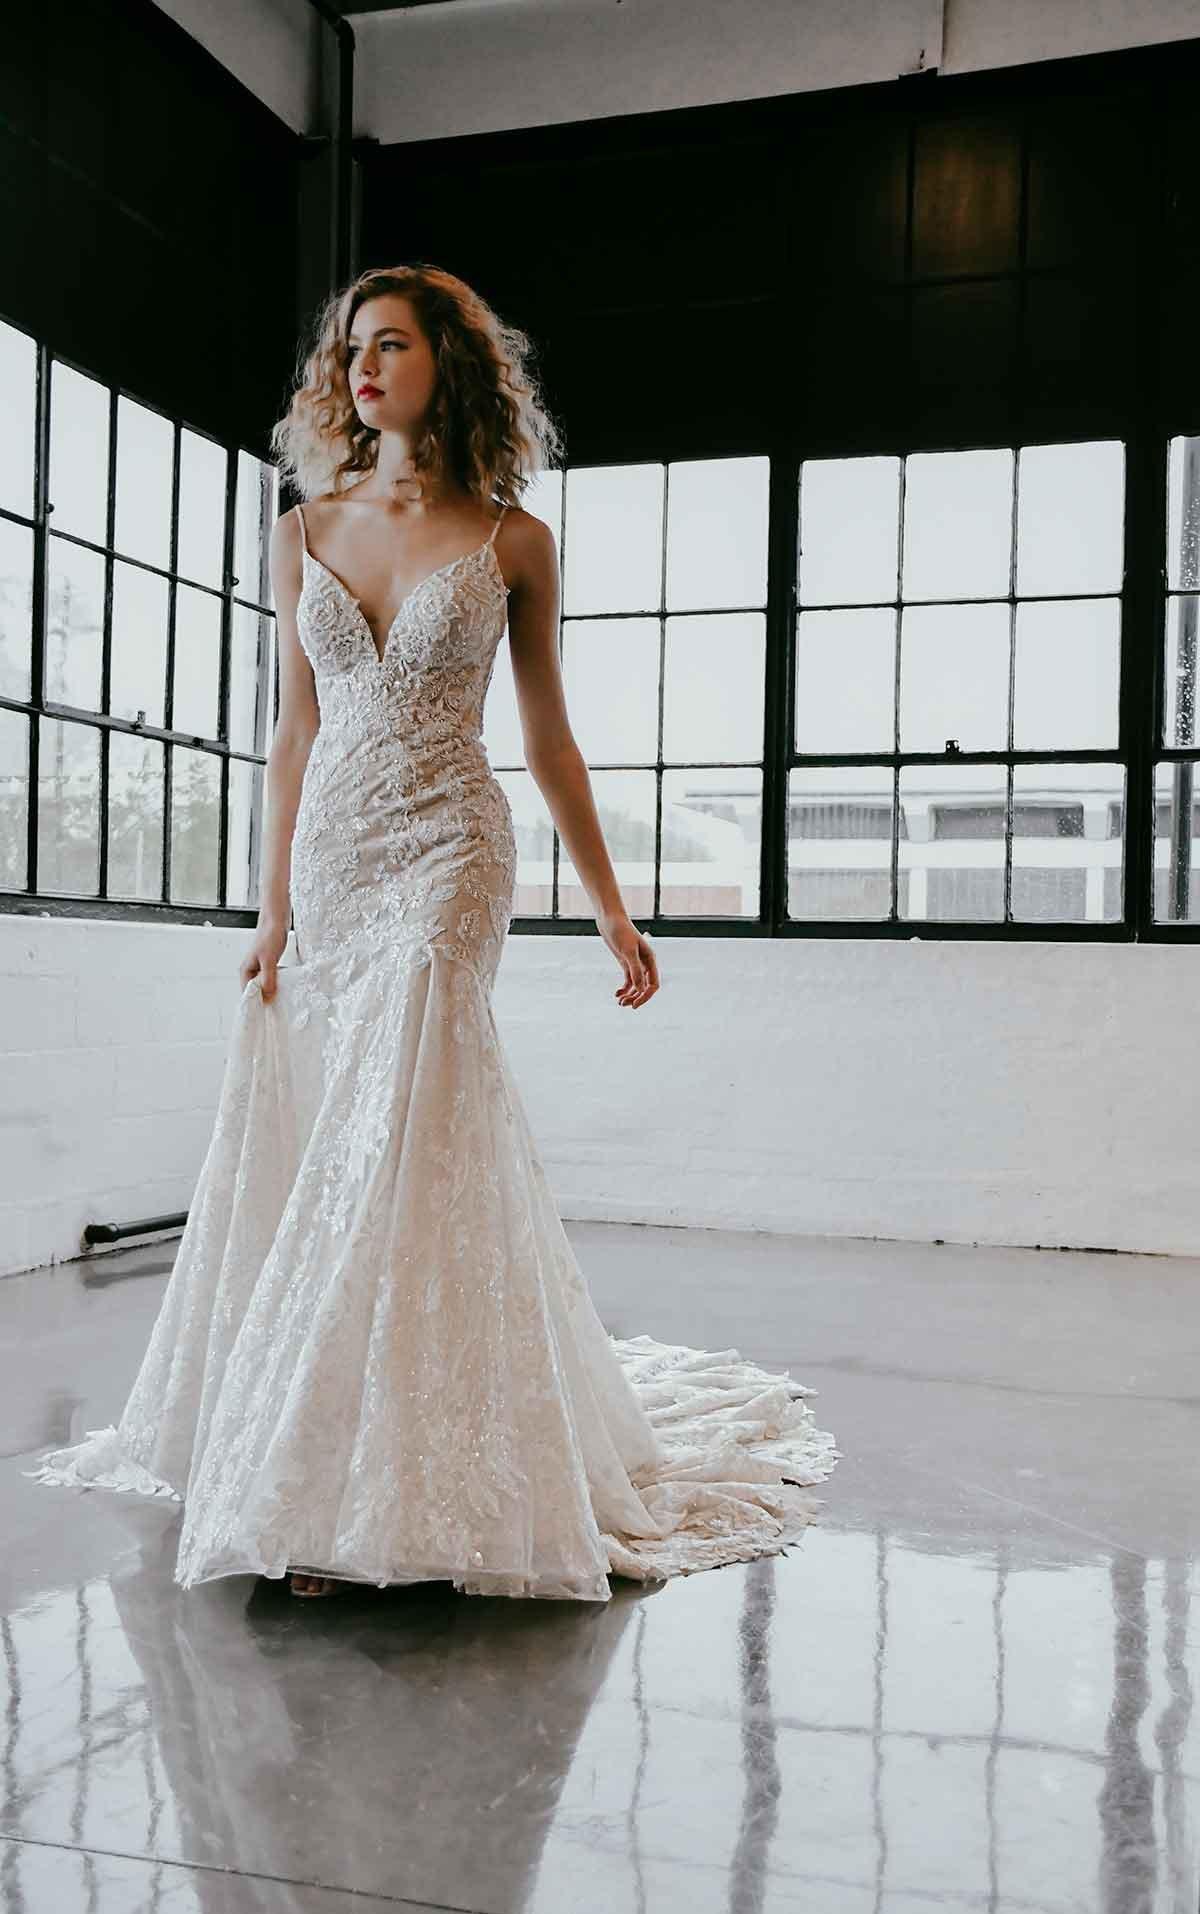 Vestidos de novia corte sirena: 50 modelos para encontrar inspiración